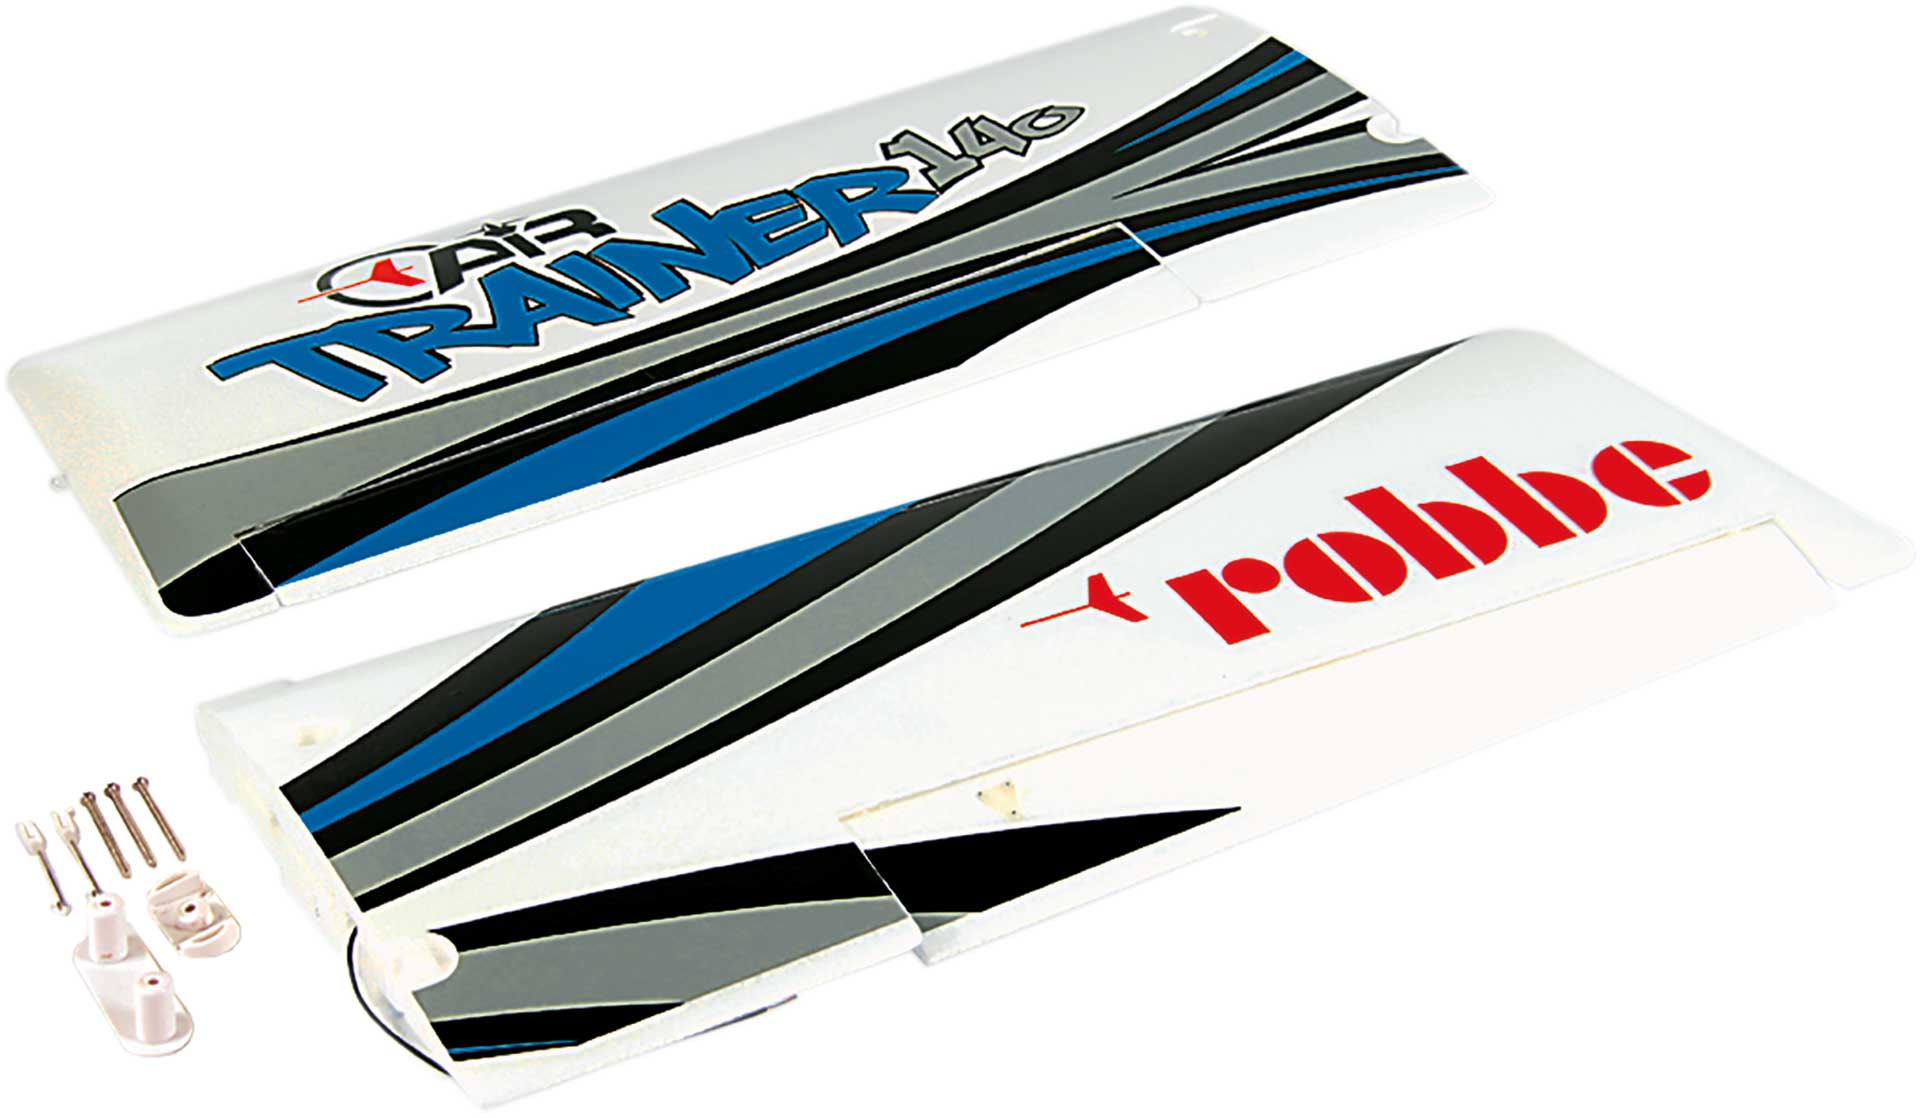 Robbe Modellsport SYSTÈME DE SURFACE Air Trainer 140